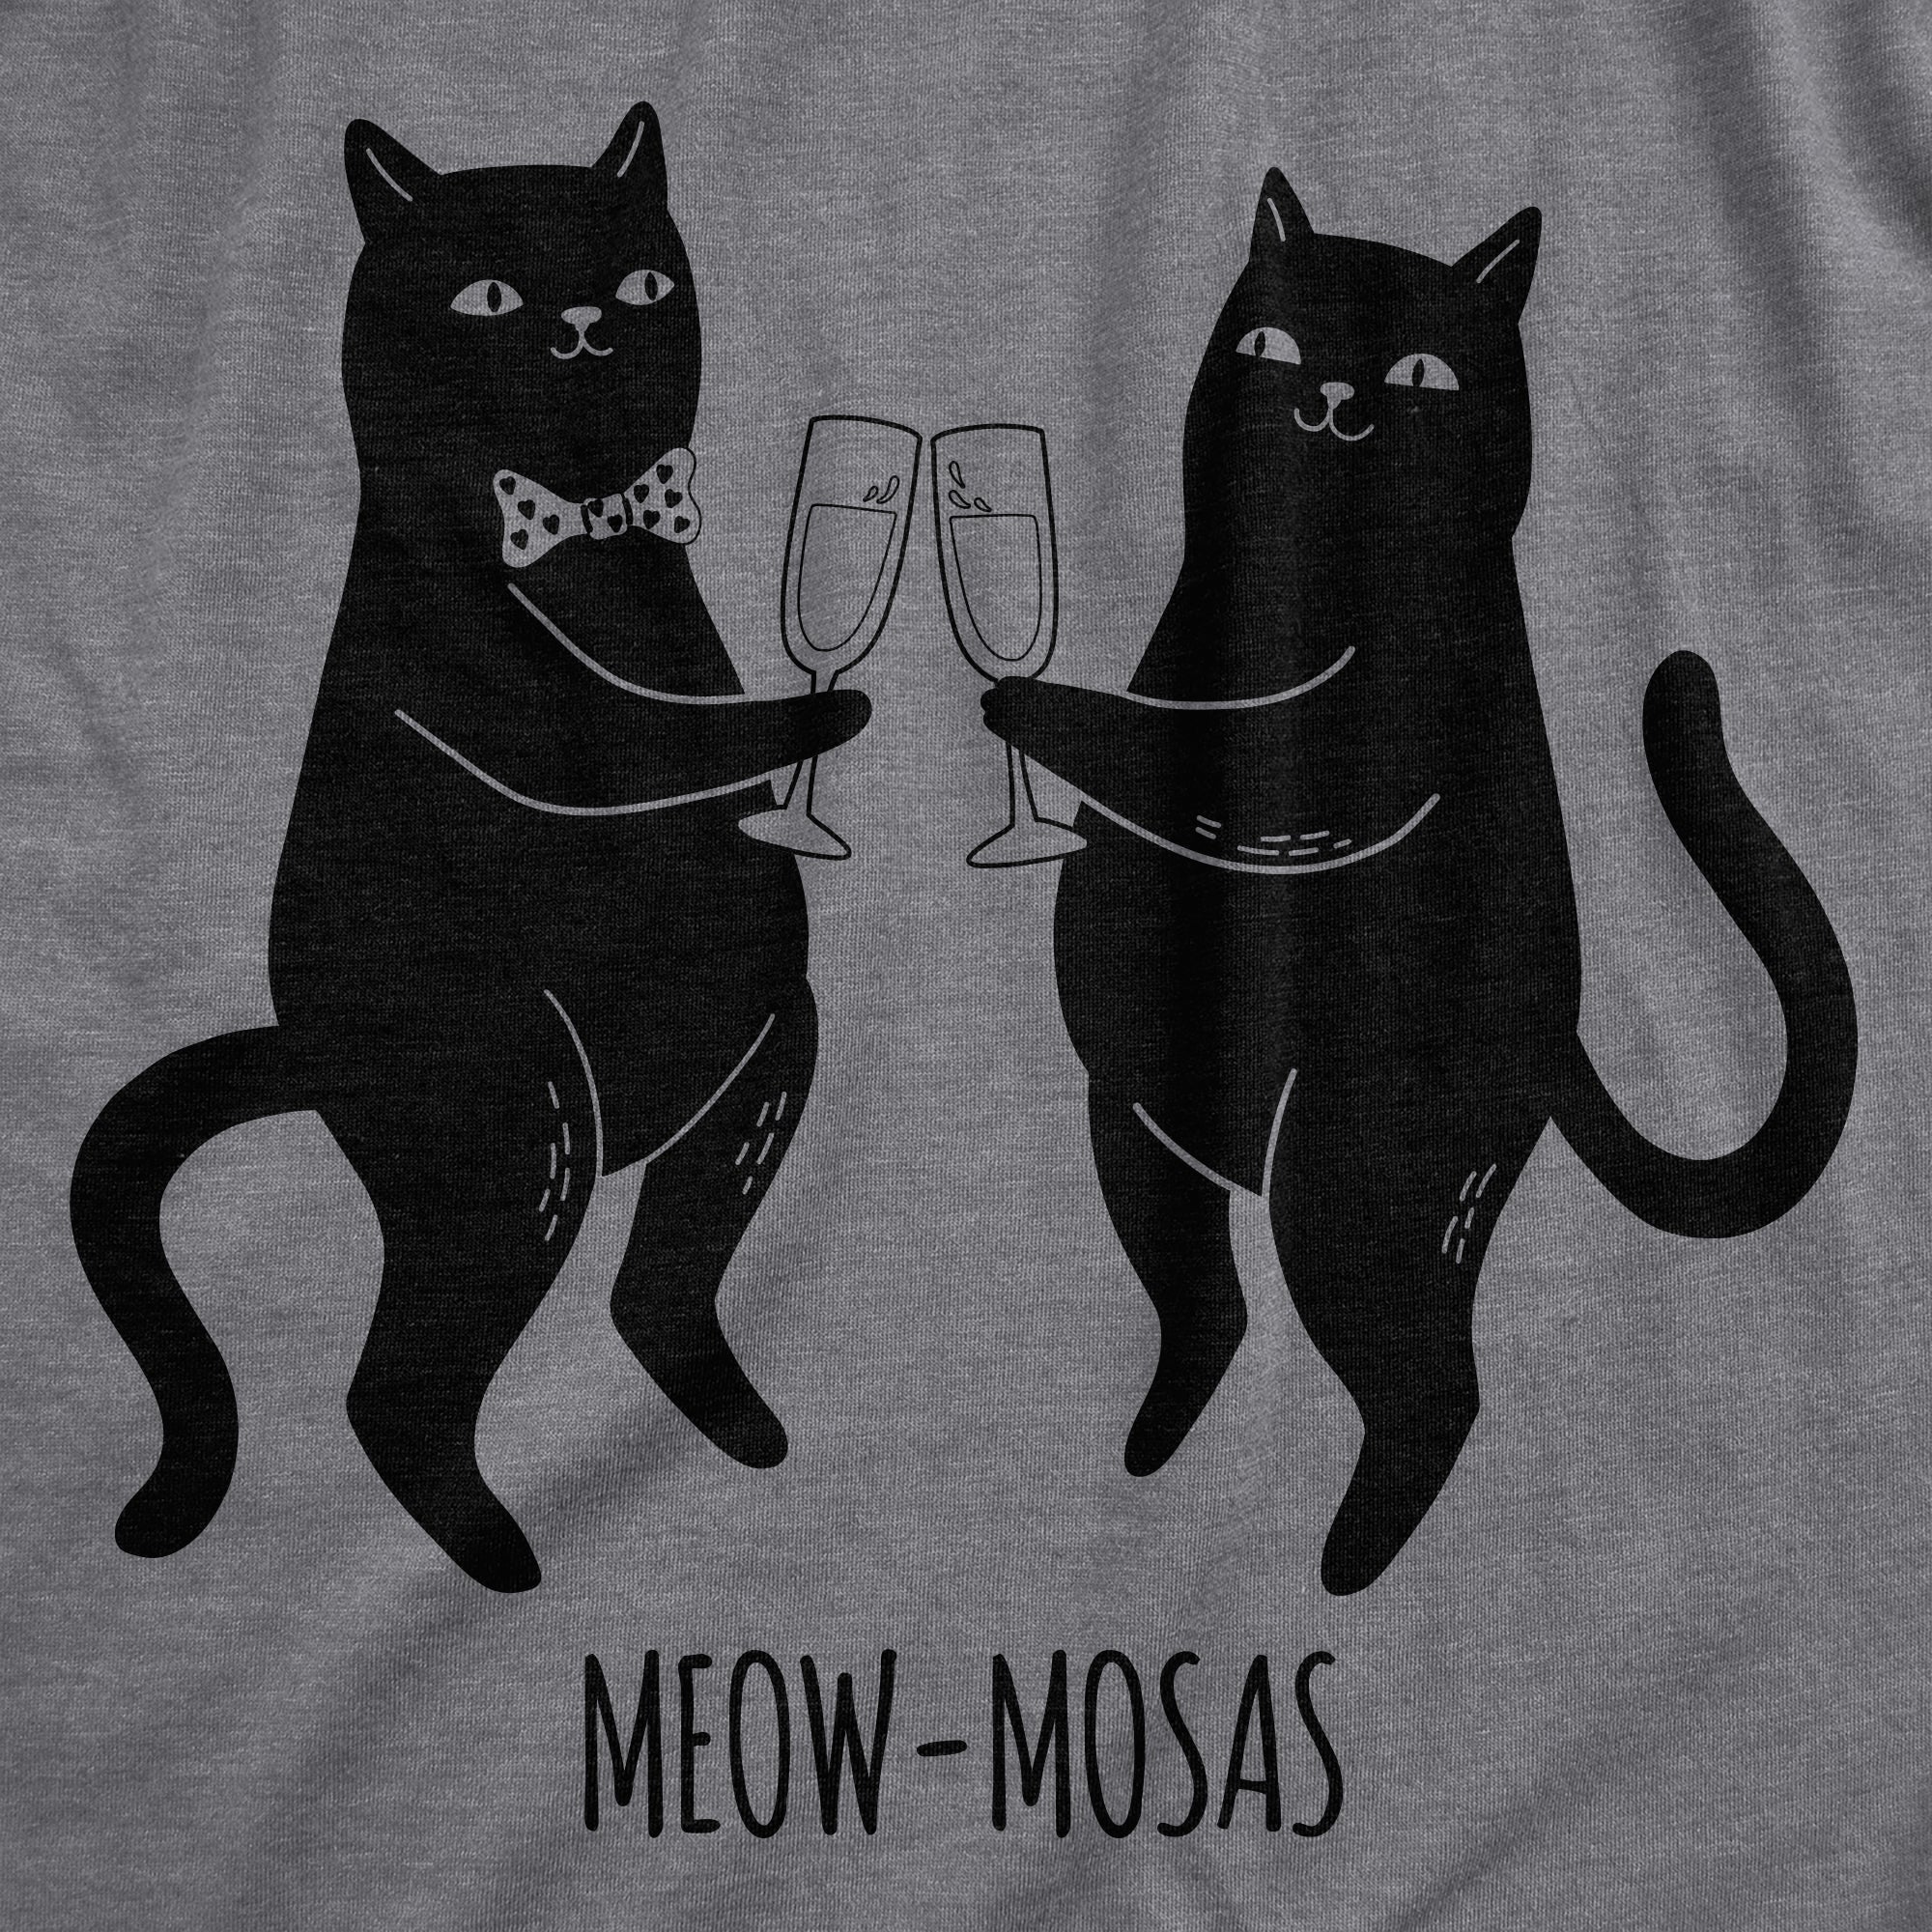 Funny Dark Heather Grey - MEOW Meow Mosas Womens T Shirt Nerdy cat drinking Tee